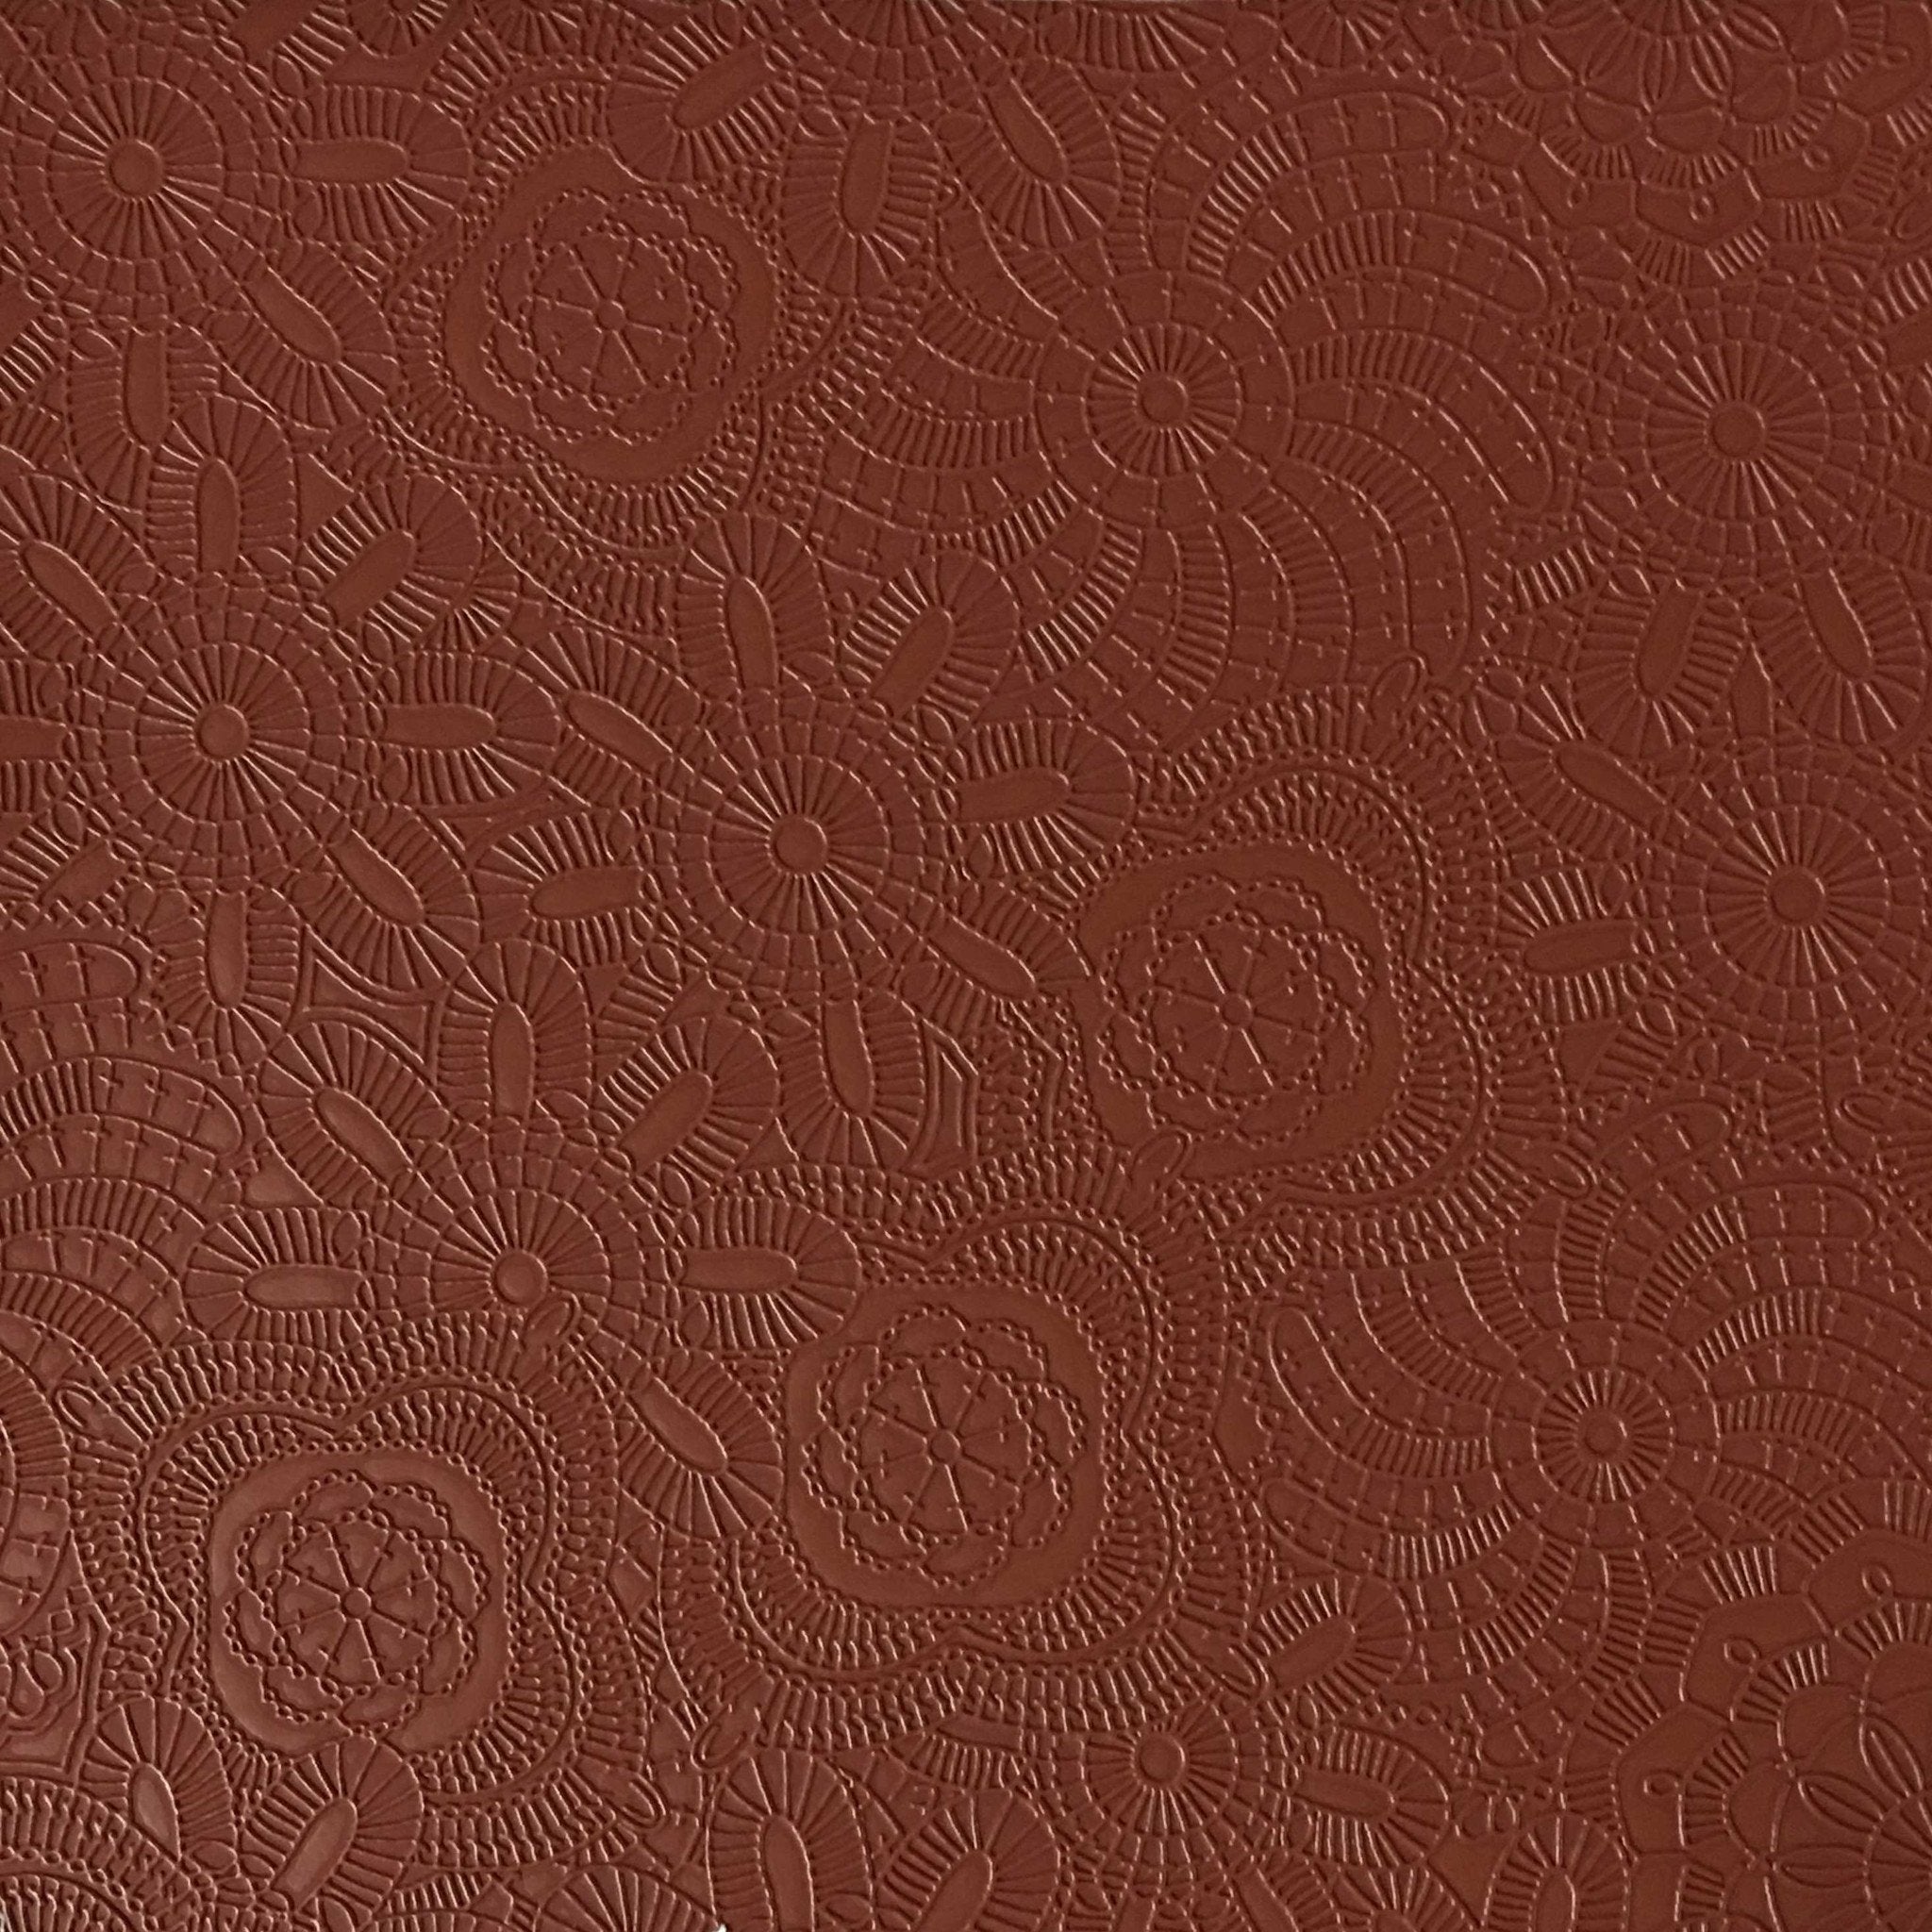 Camden - Embossed Designer Pattern Vinyl Upholstery Fabric by the Yard